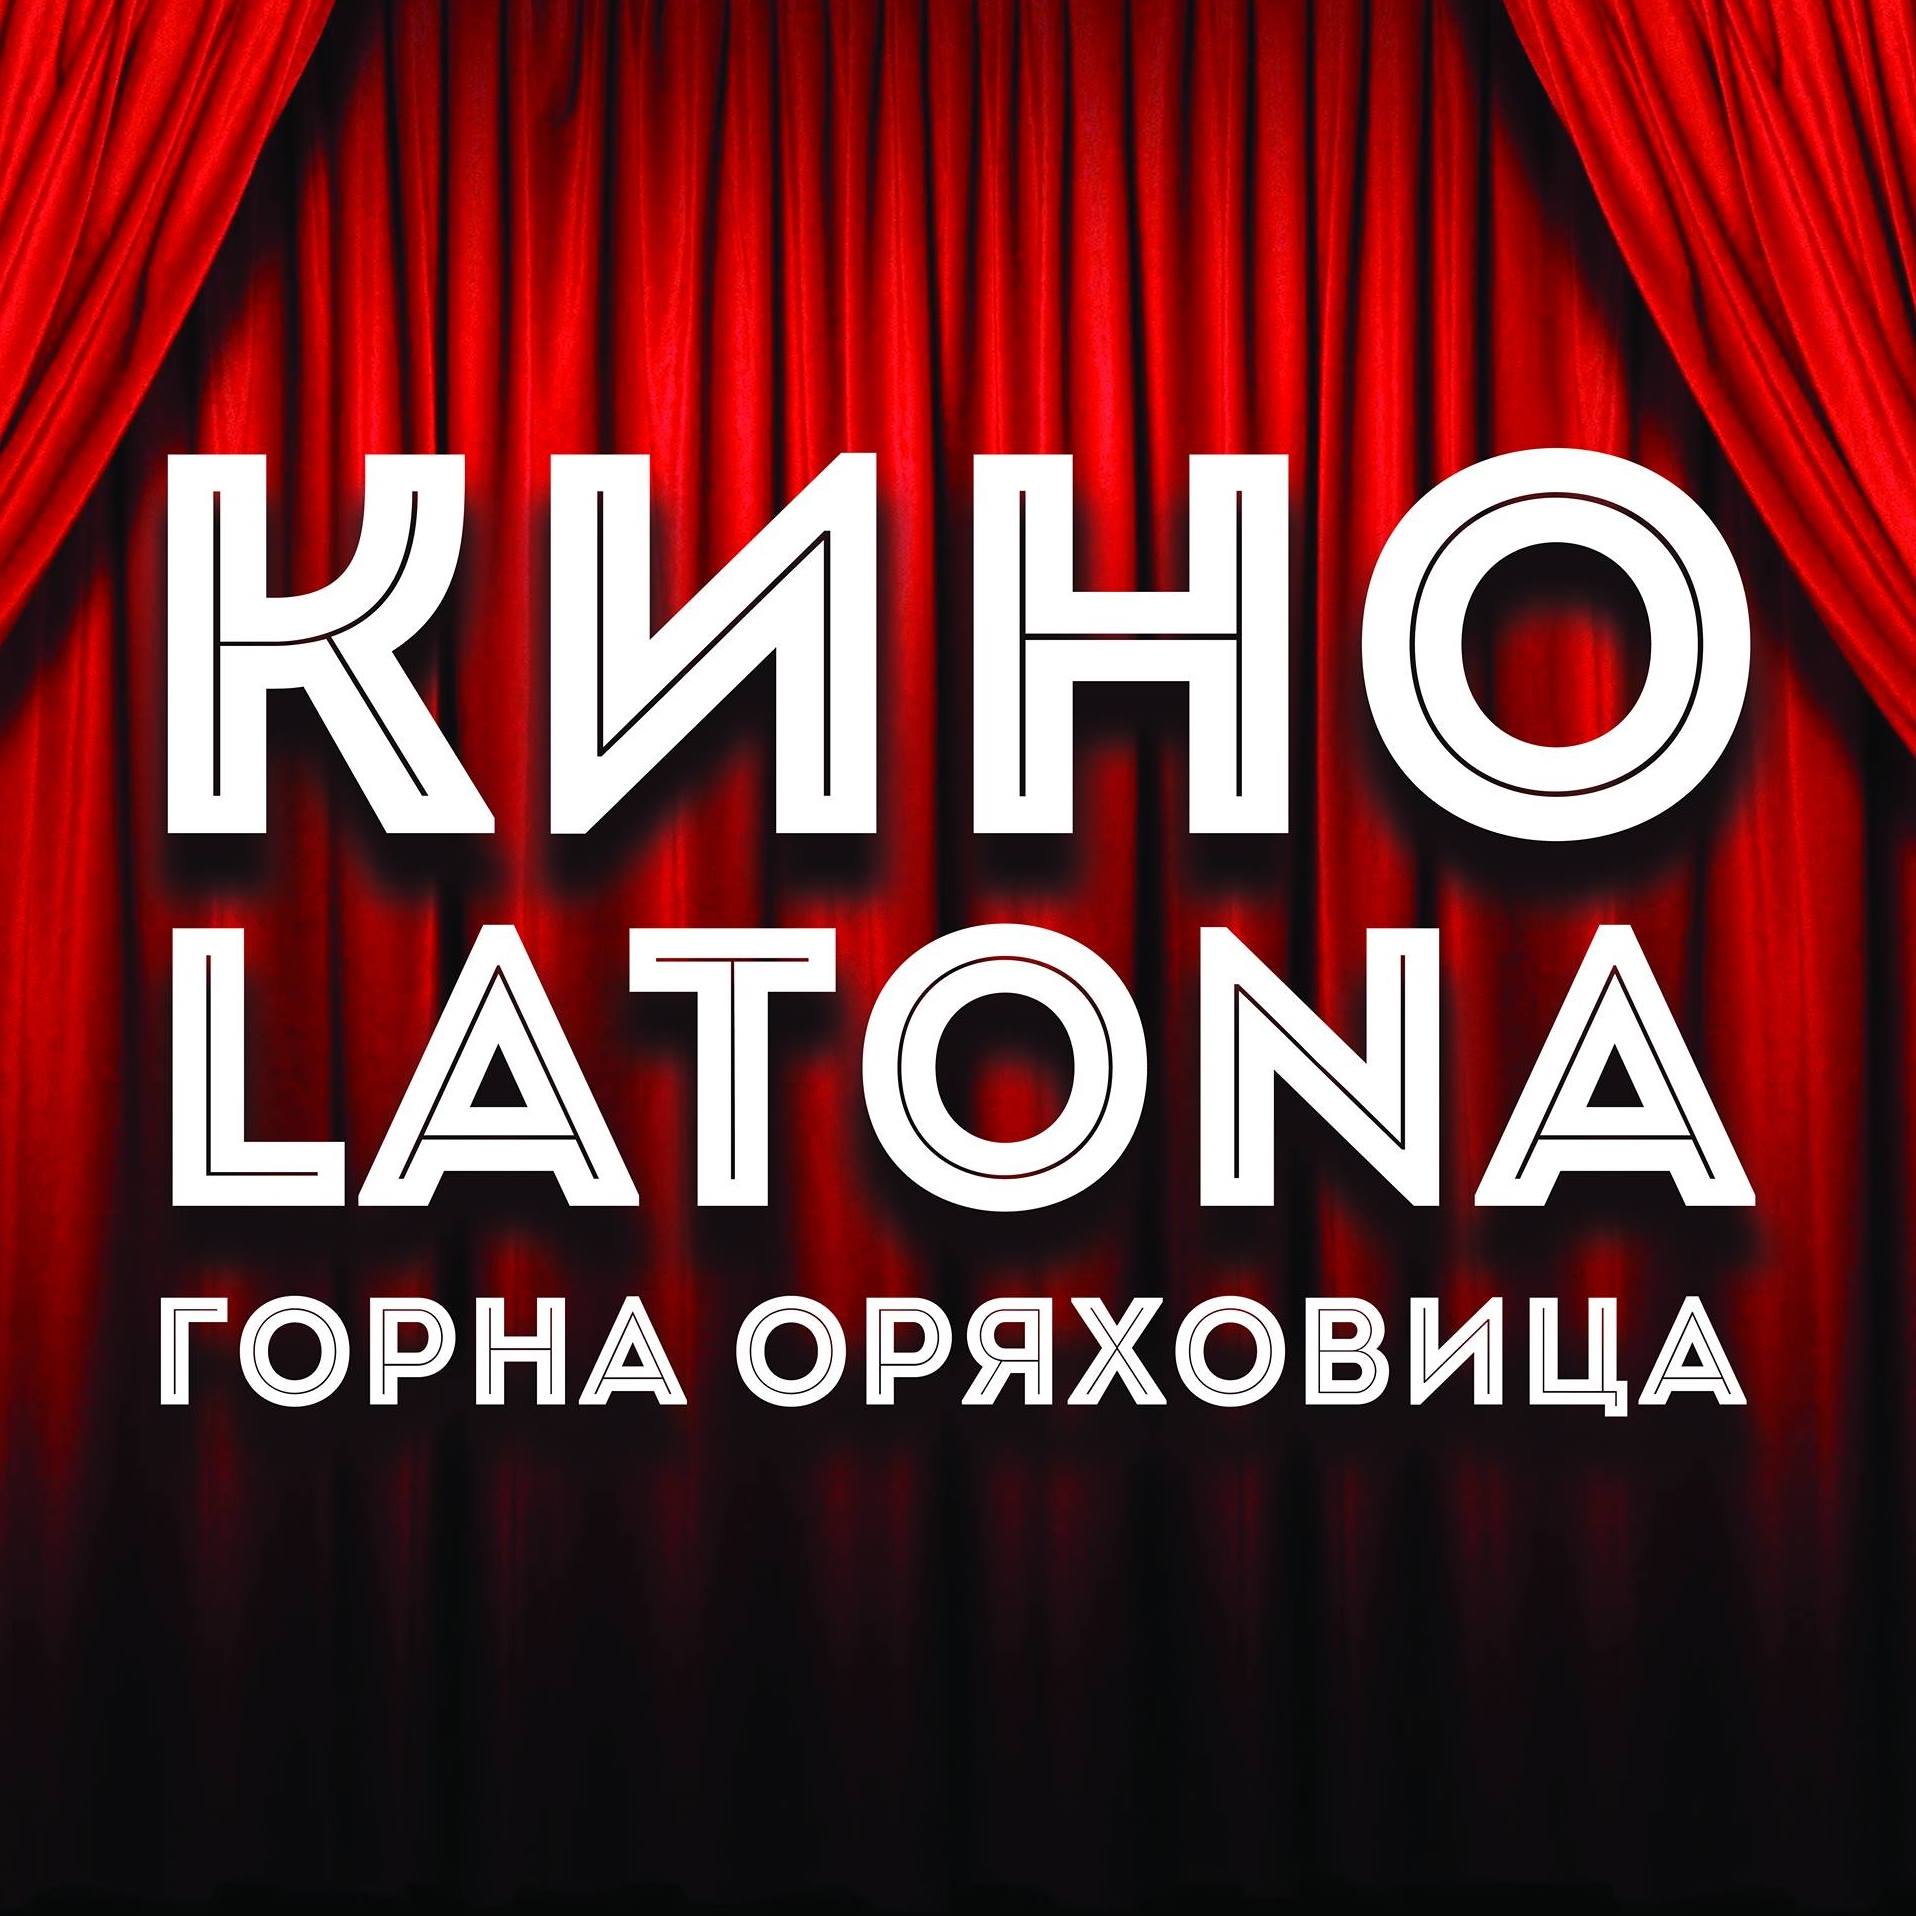 Latona Cinema Горна Оряховица: Кино програма - 20-26 май 2022